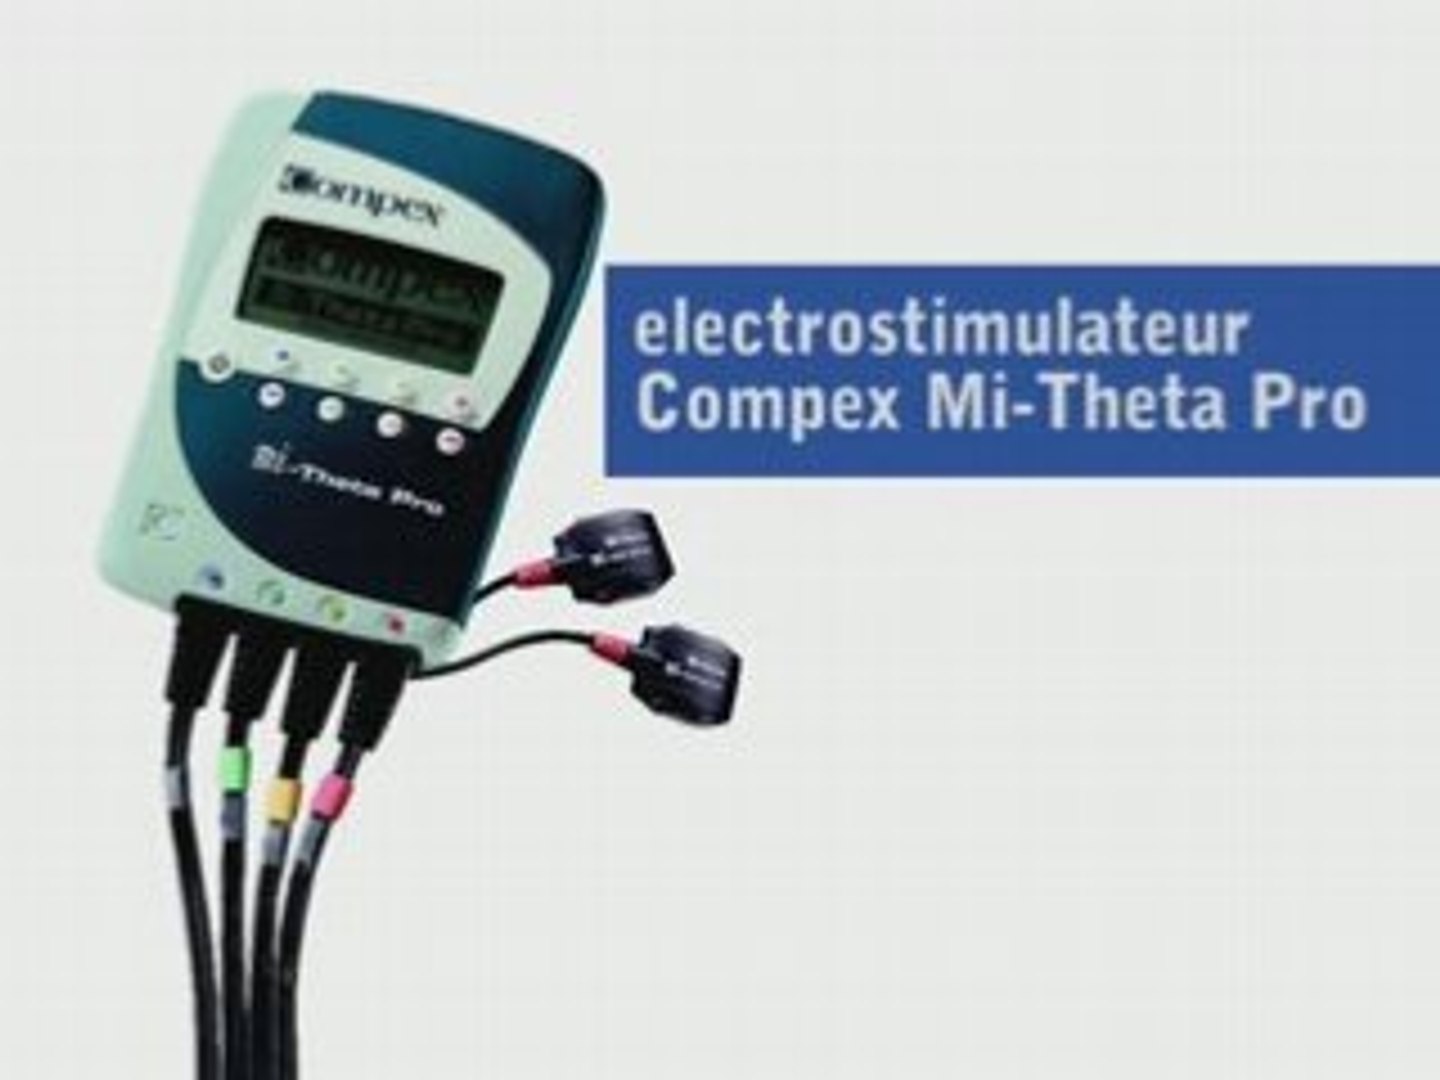 Electrostimulateur Compex Mi-Theta Pro chez NMmedical - Vidéo Dailymotion